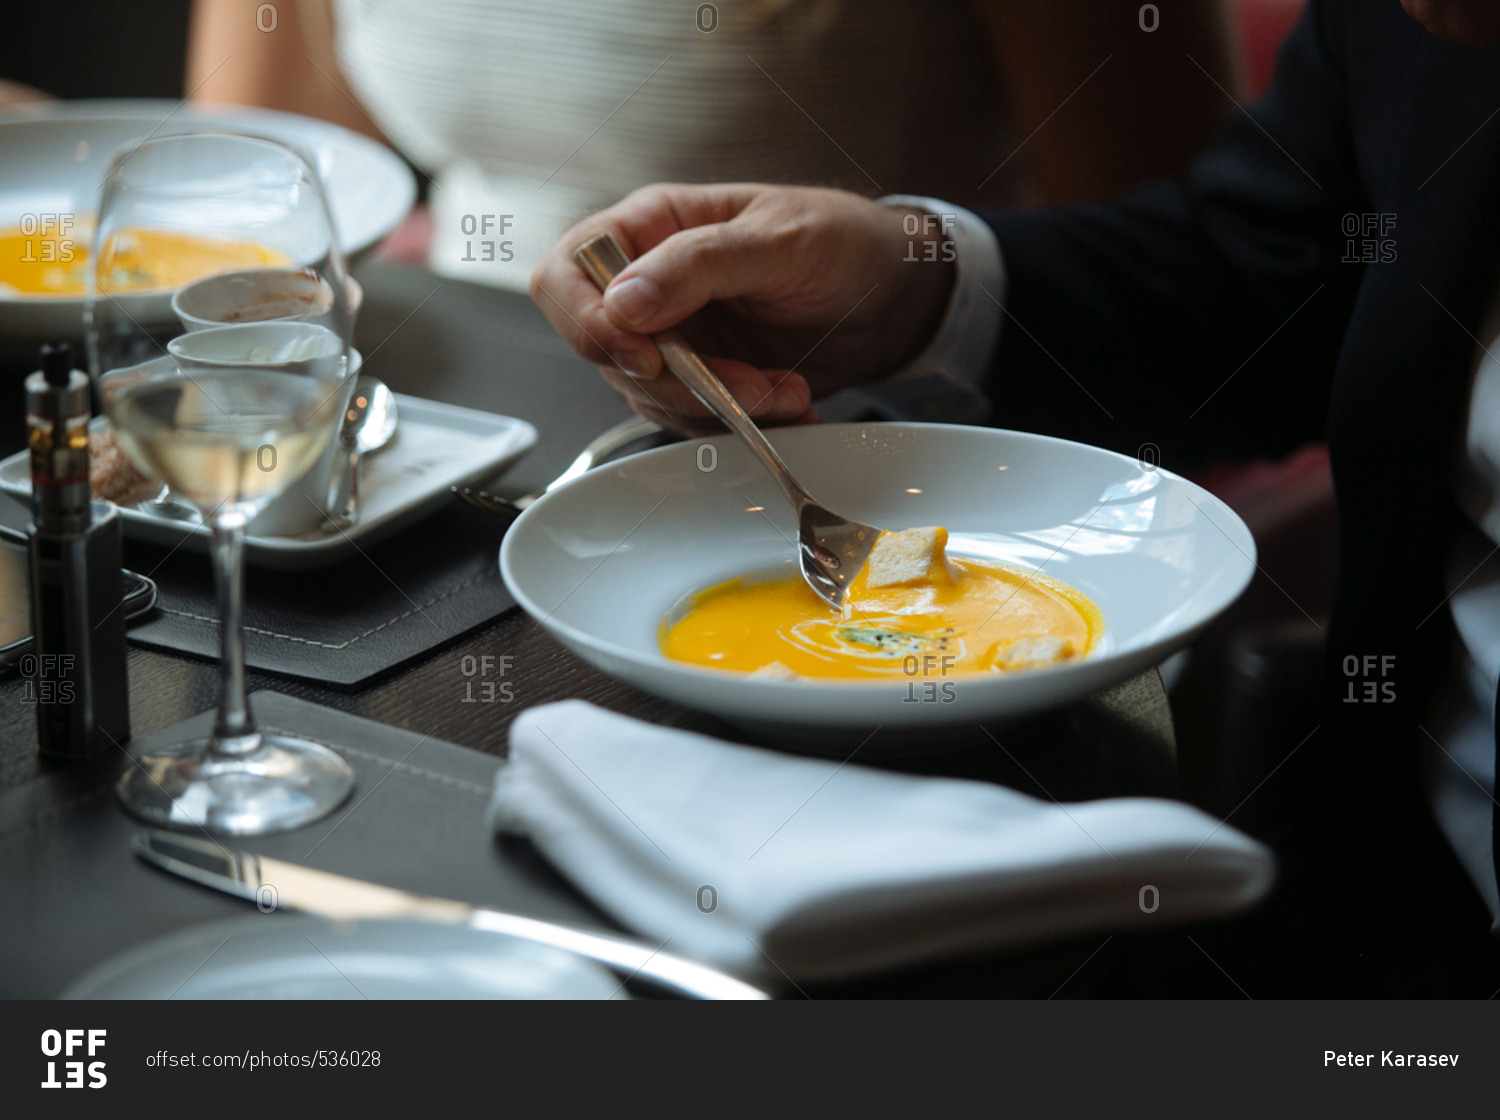 Groom eating soup at wedding